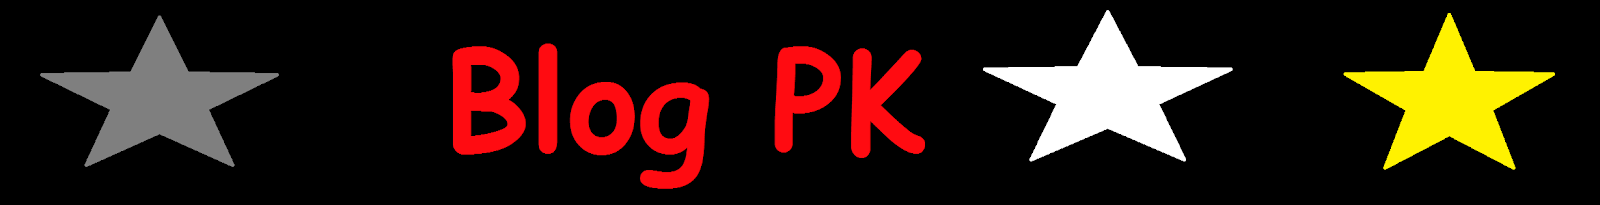 Blog PK